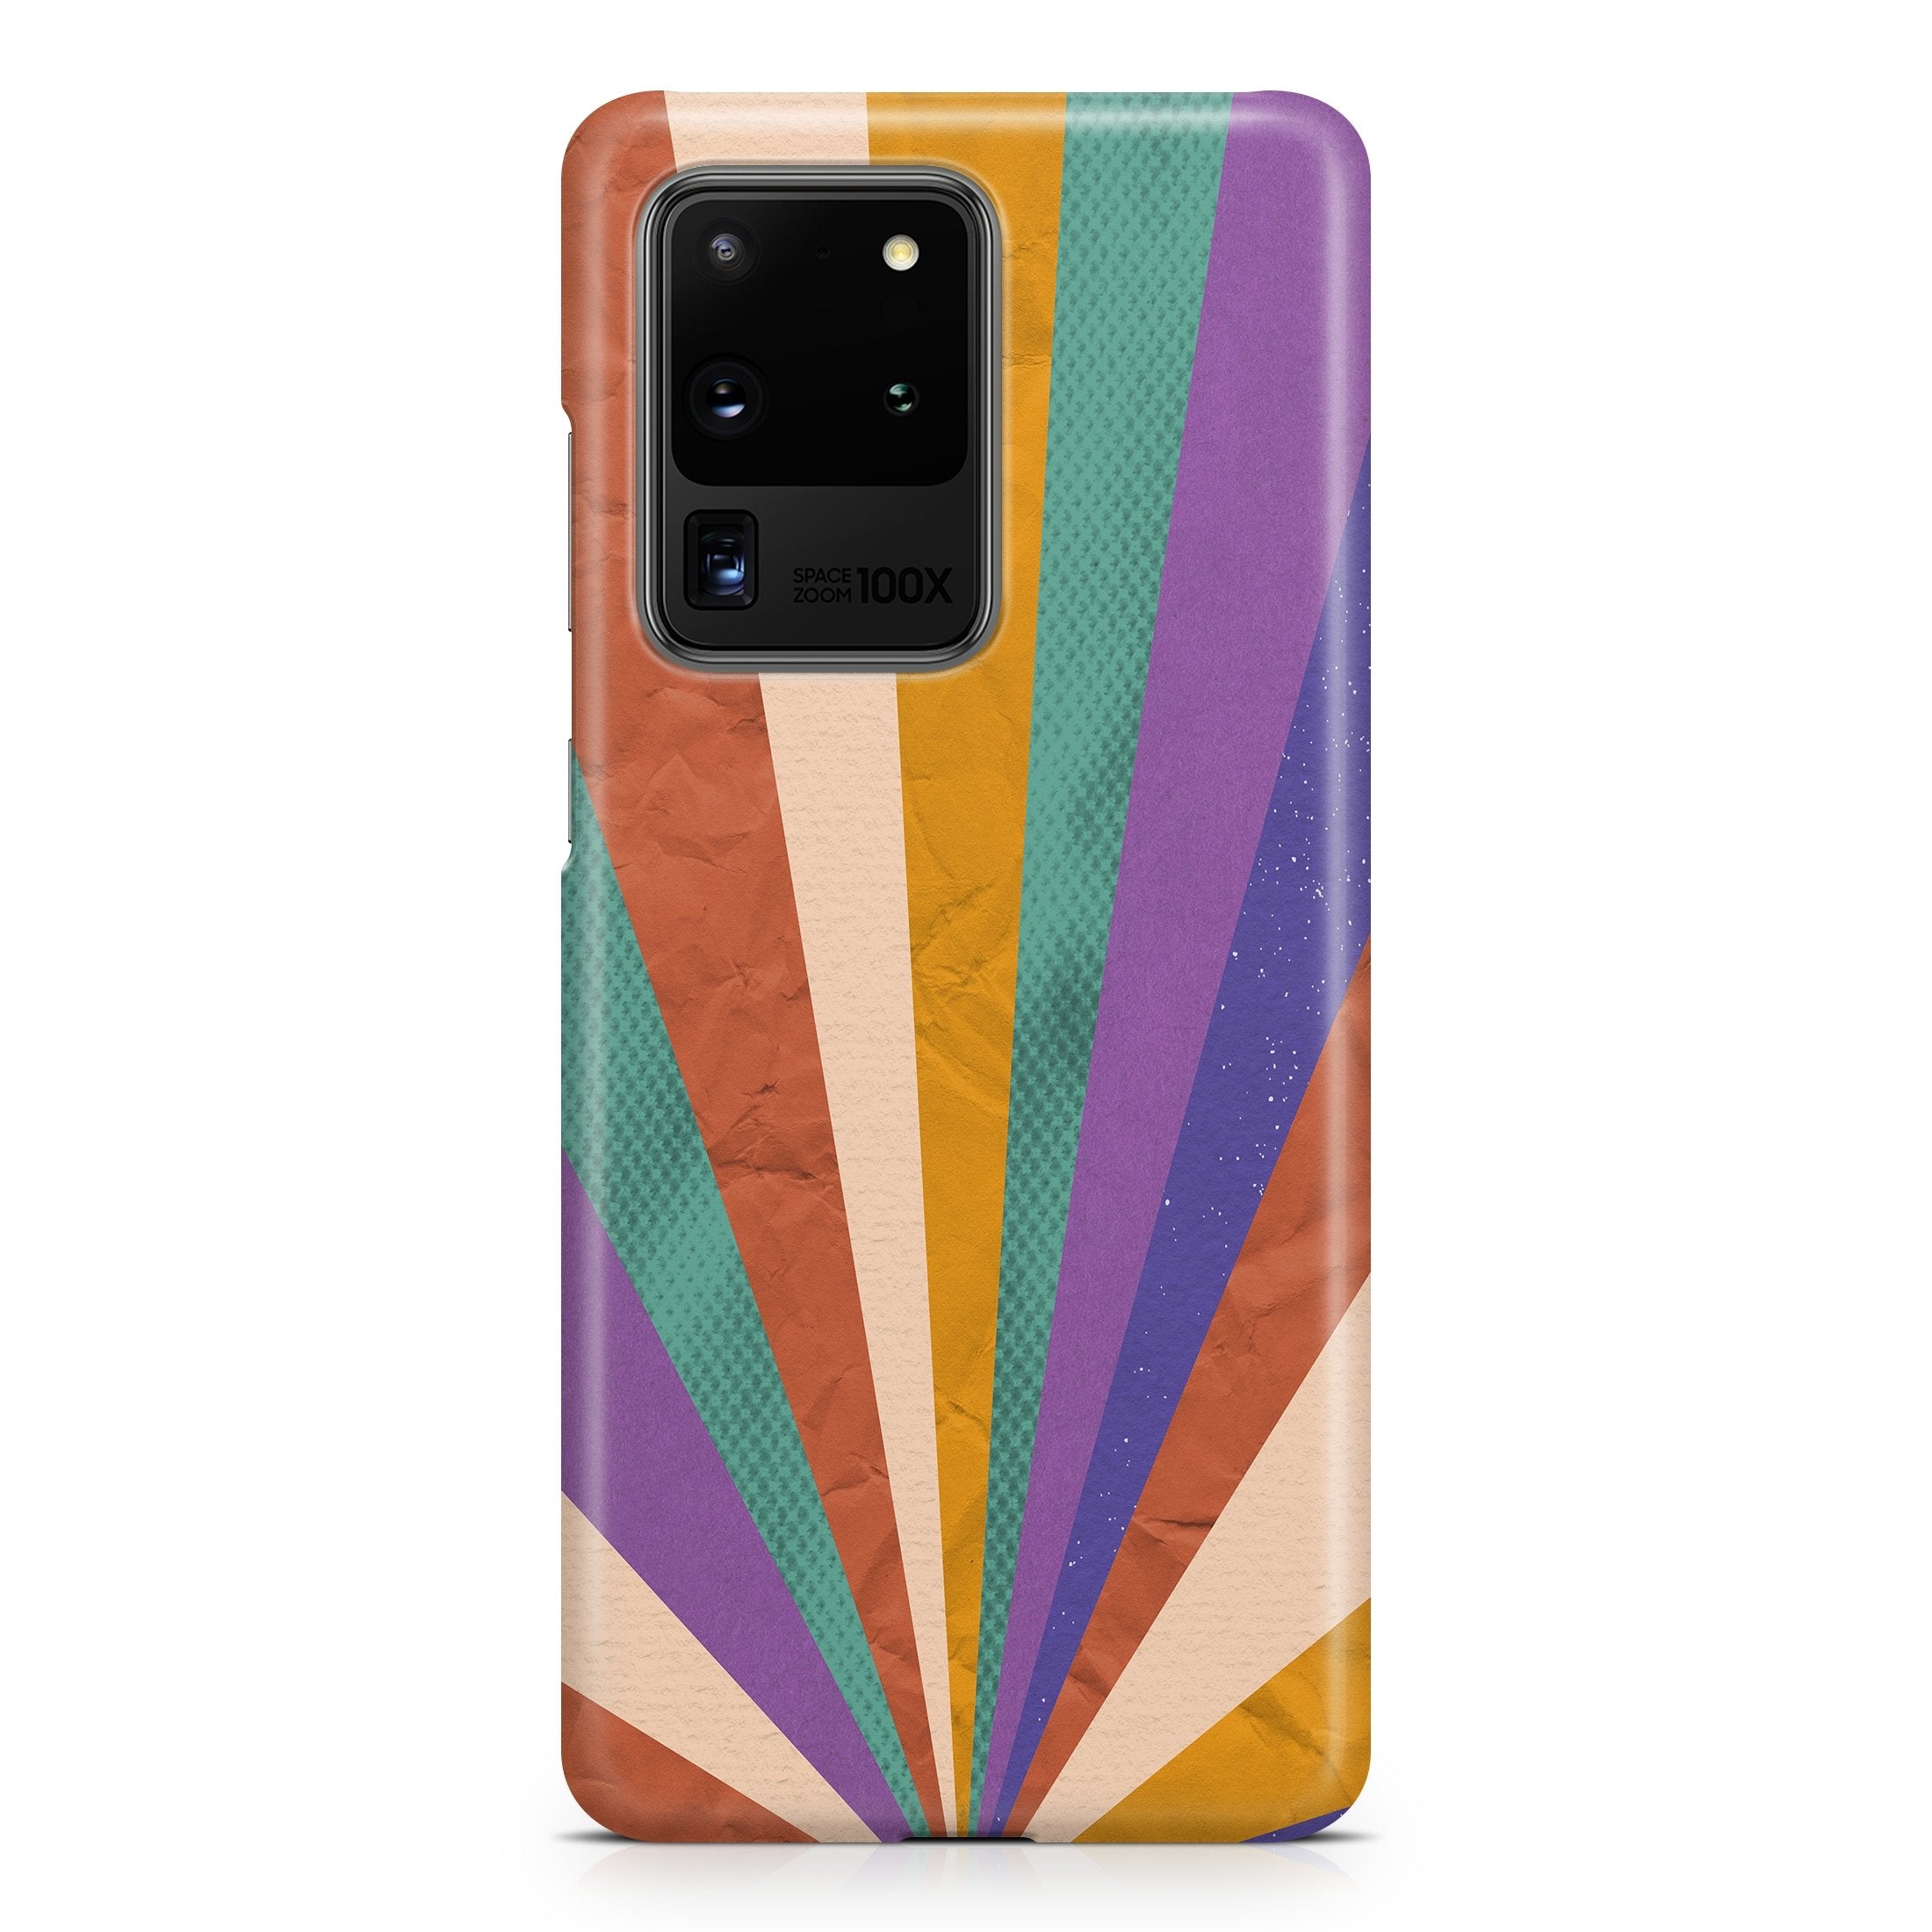 Retro Blast - Samsung phone case designs by CaseSwagger